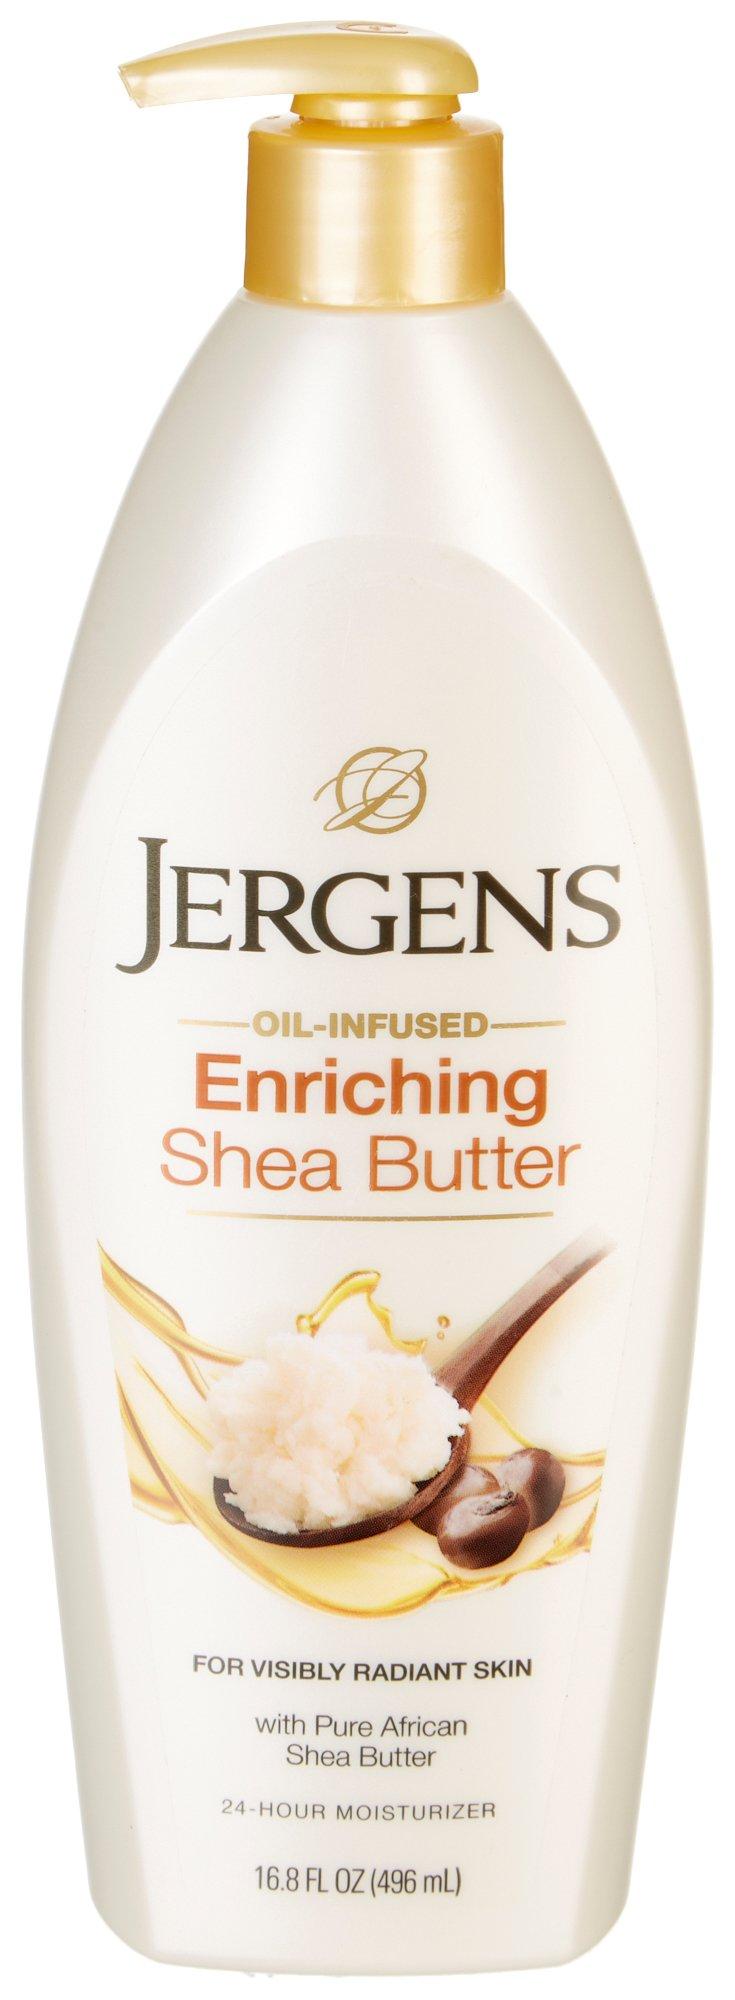 Oil-Infused Enriching Shea Butter Skin Moisturizer